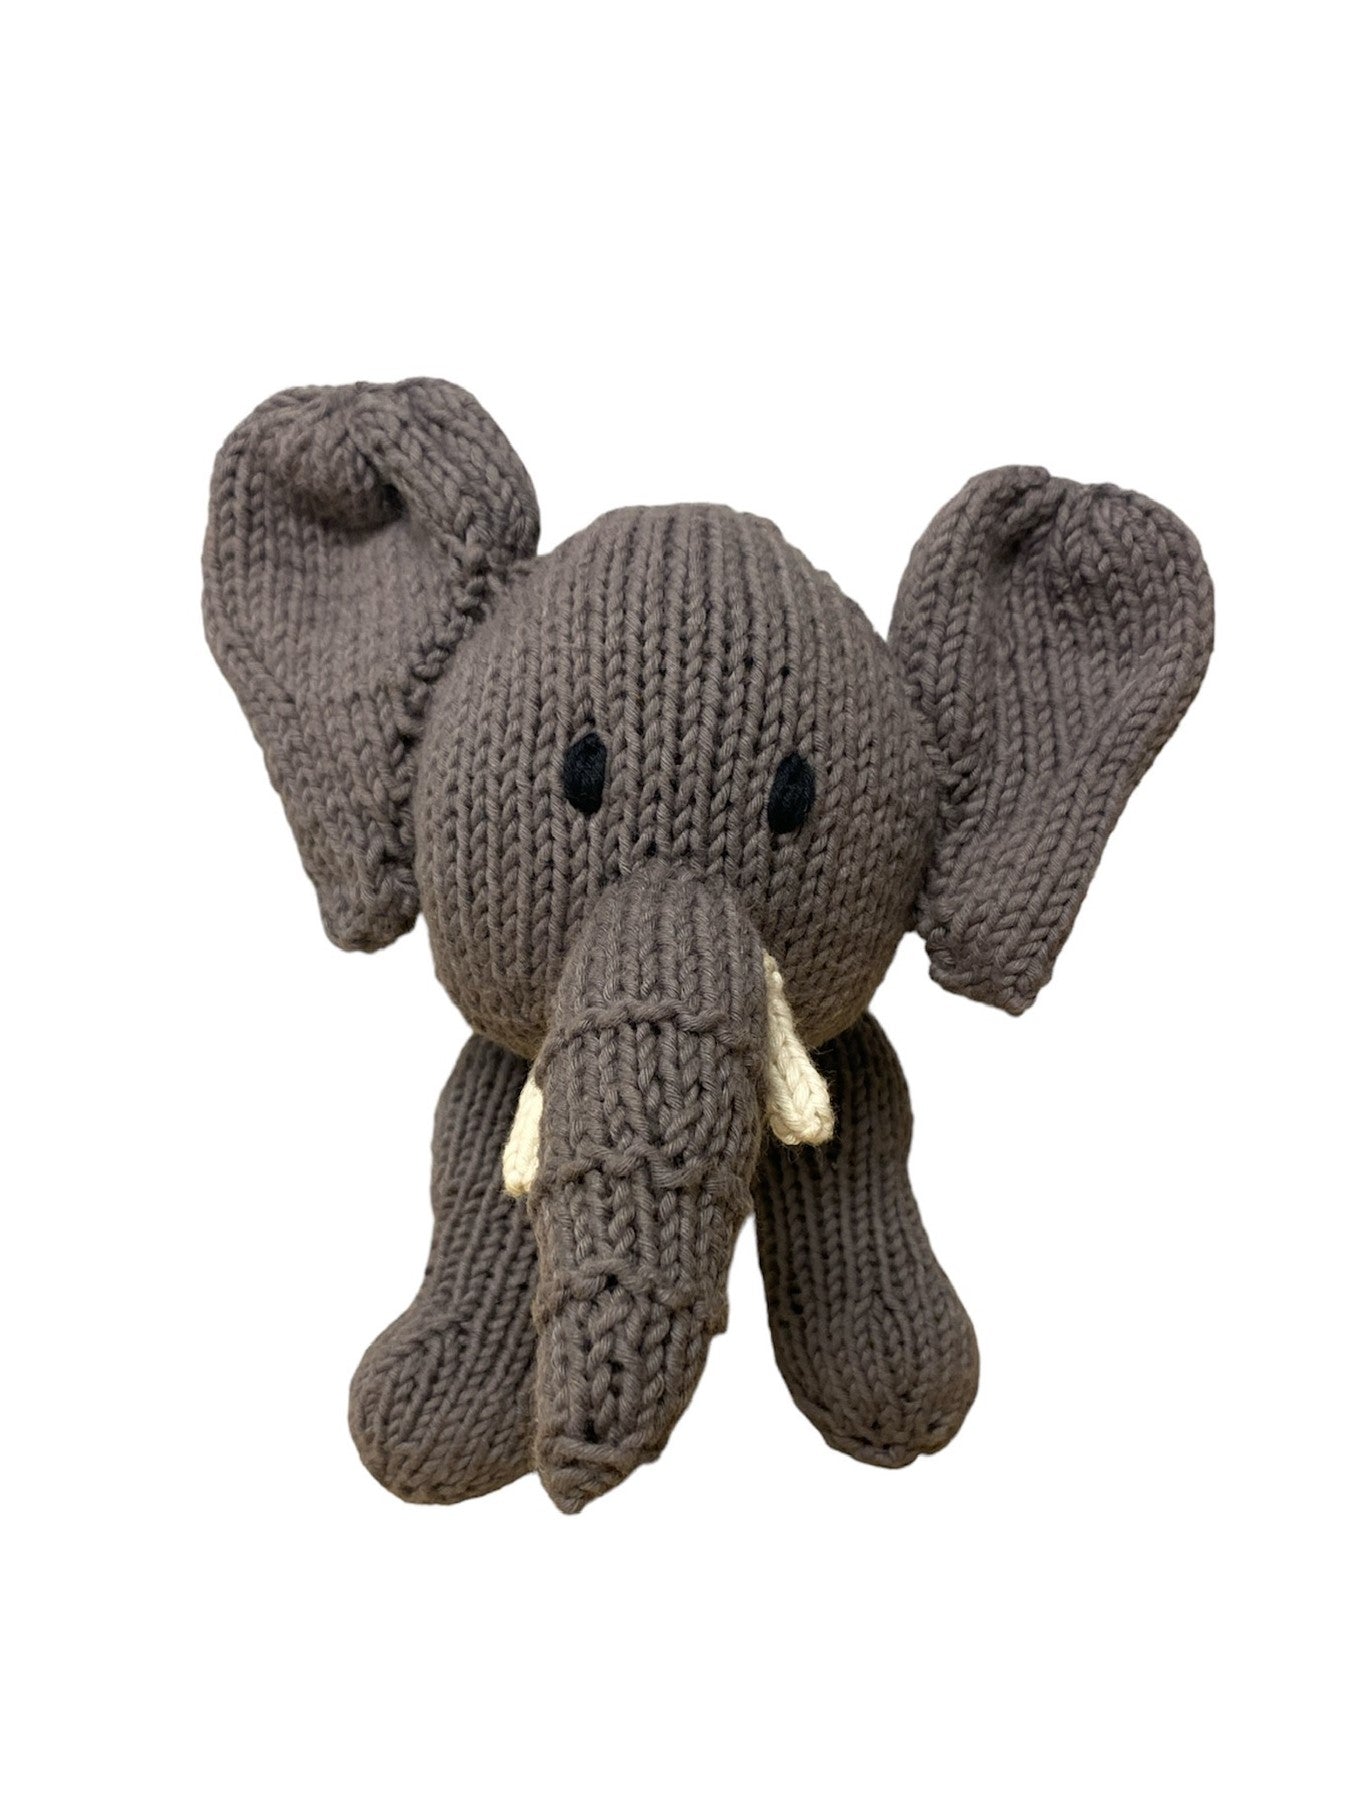 Hand Knitted Elephant - Medium